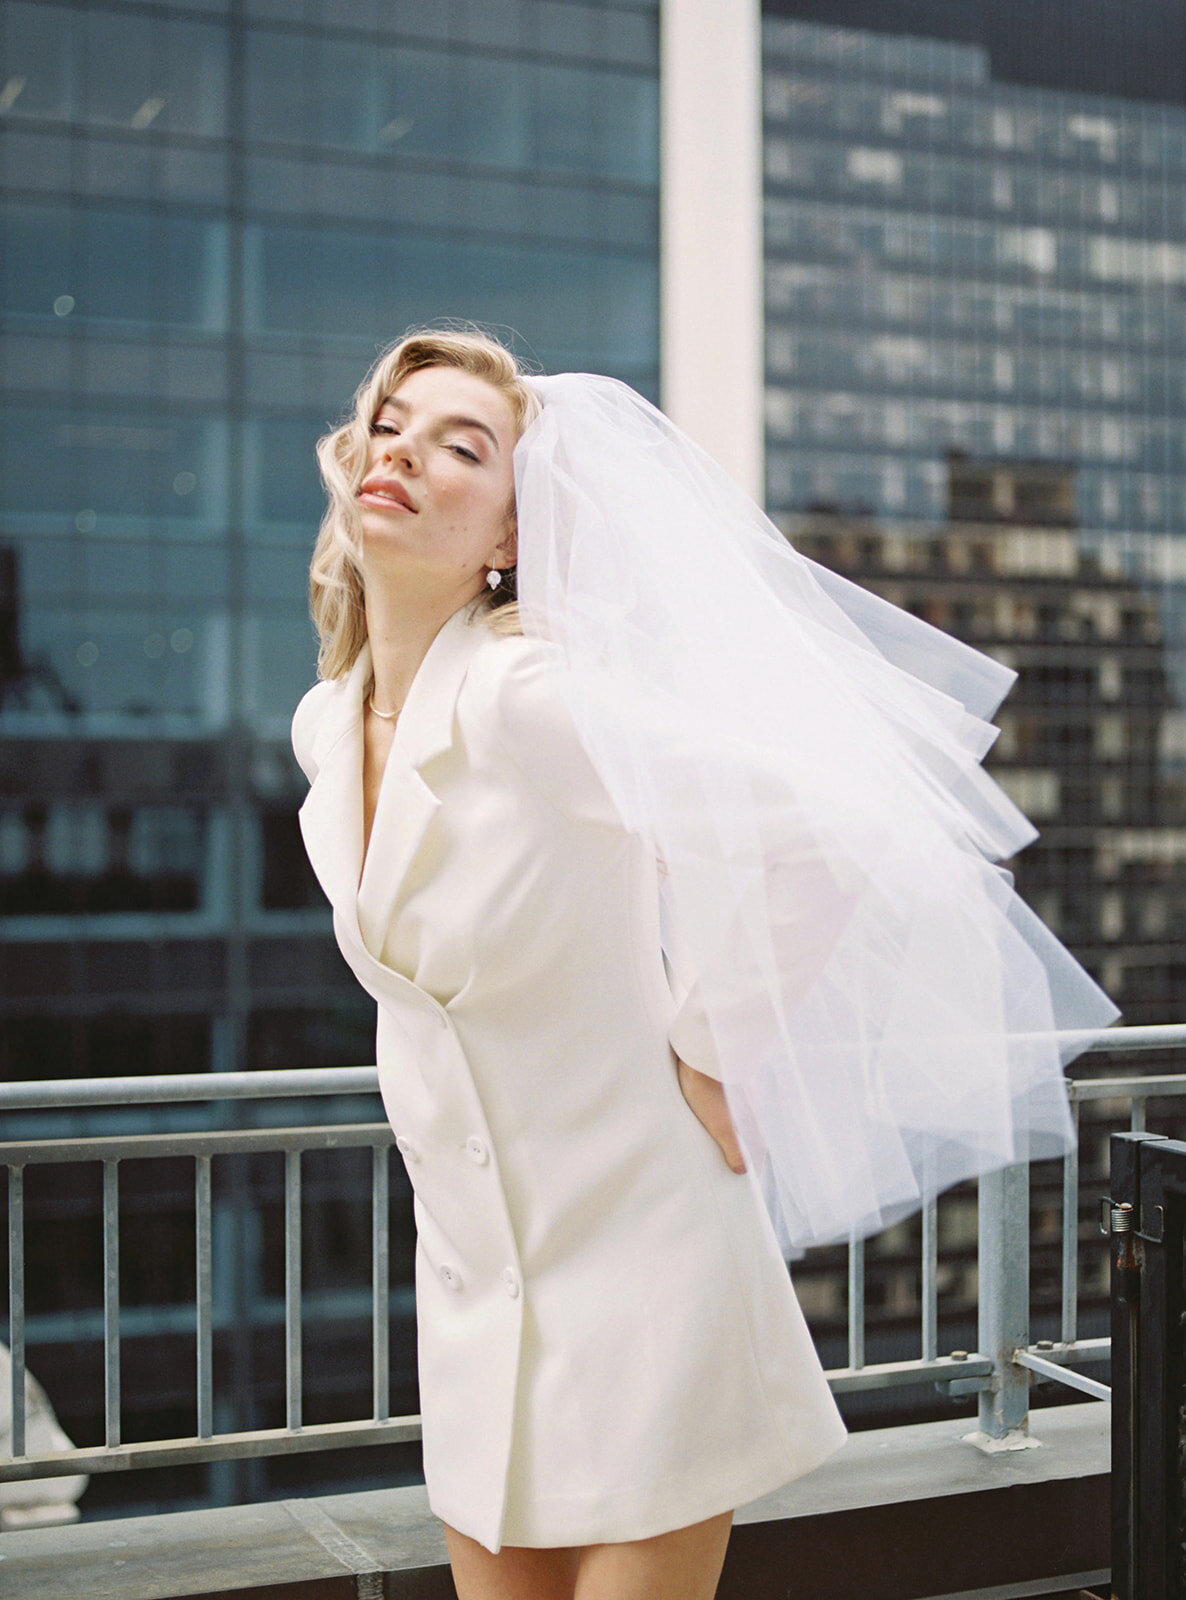 The Plaza Hotel - New York City - Elopement Wedding - Stephanie Michelle Photography - _stephaniemichellephotog - 3-R1-E013